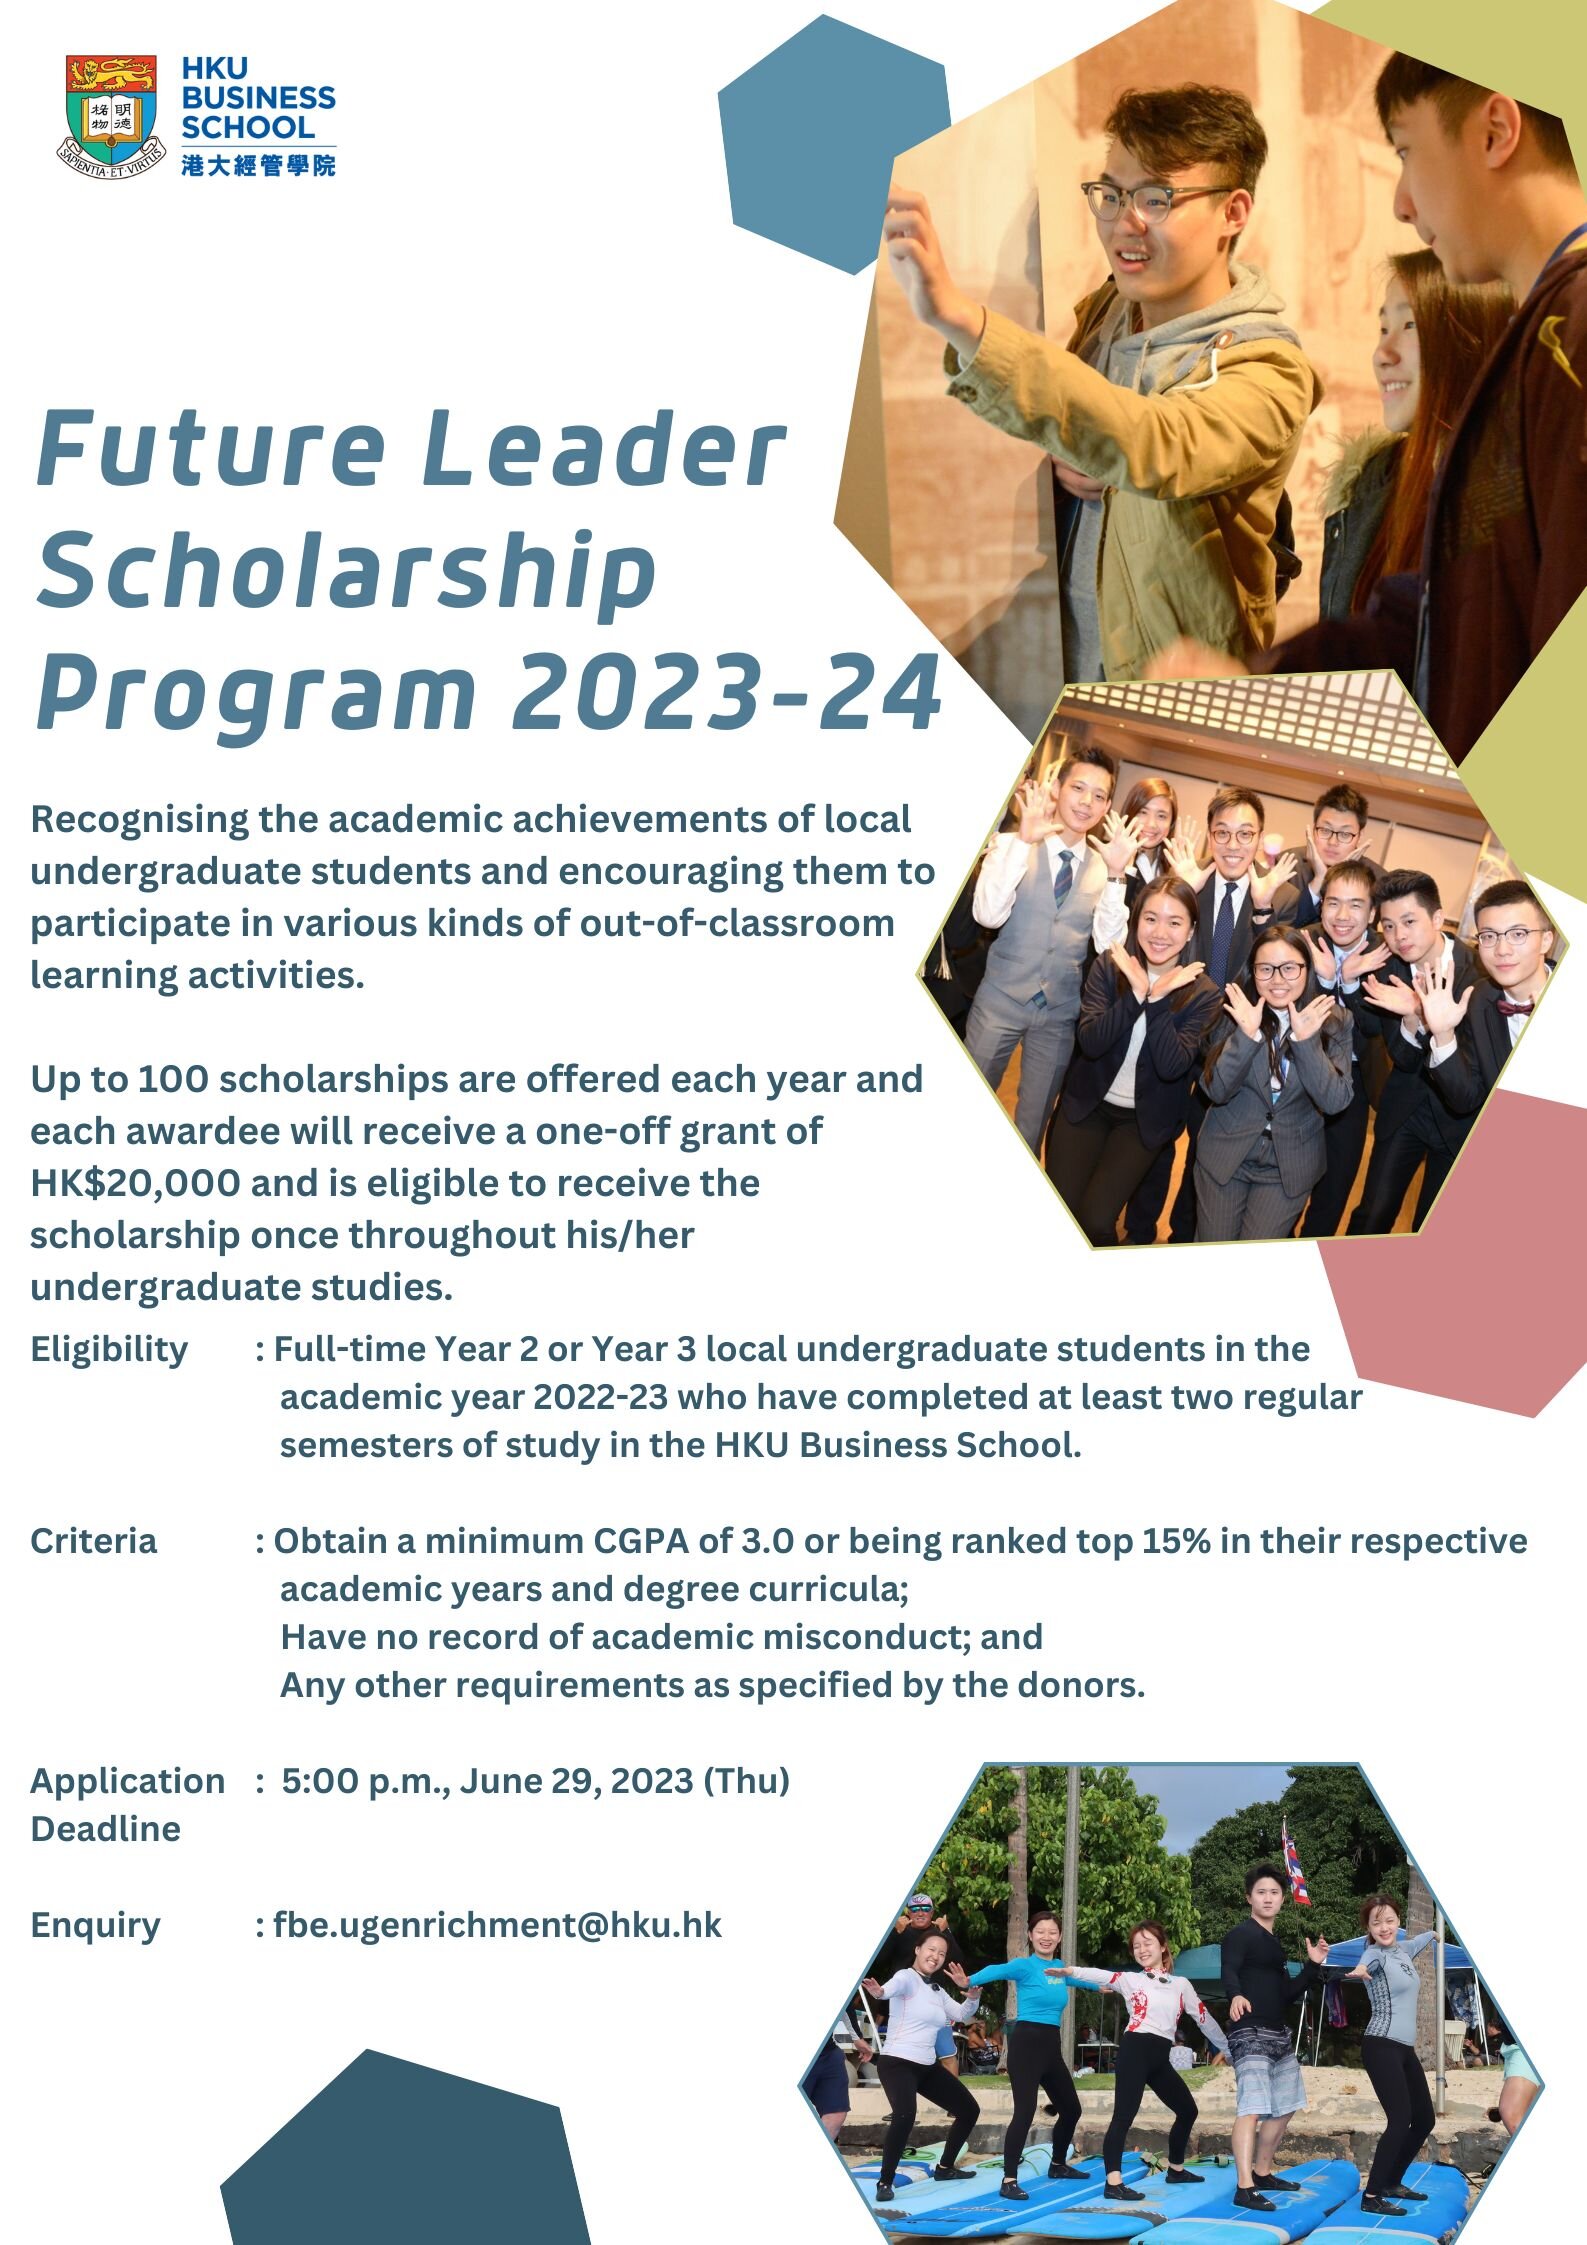 HKU Business School - Future Leader Scholarship Program 2023-24